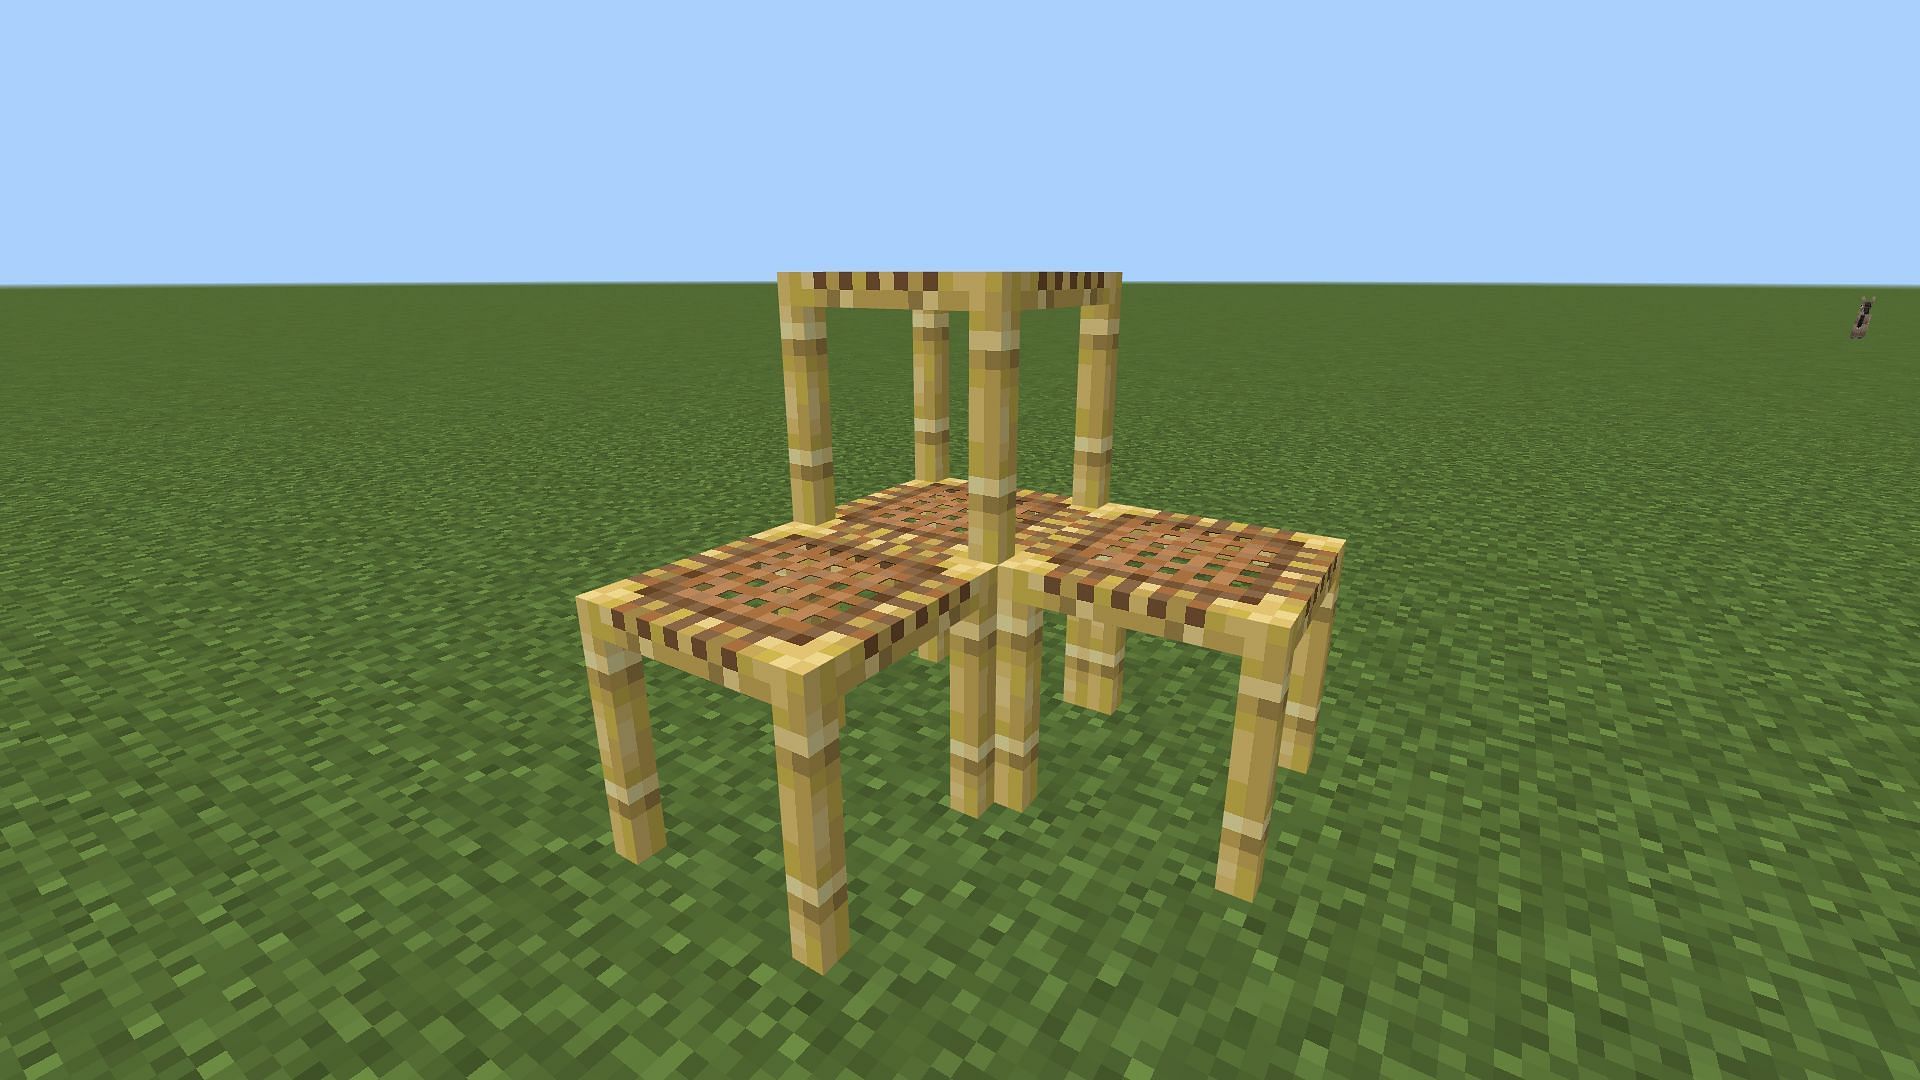 Scaffolding blocks in Minecraft (Image via Mojang)